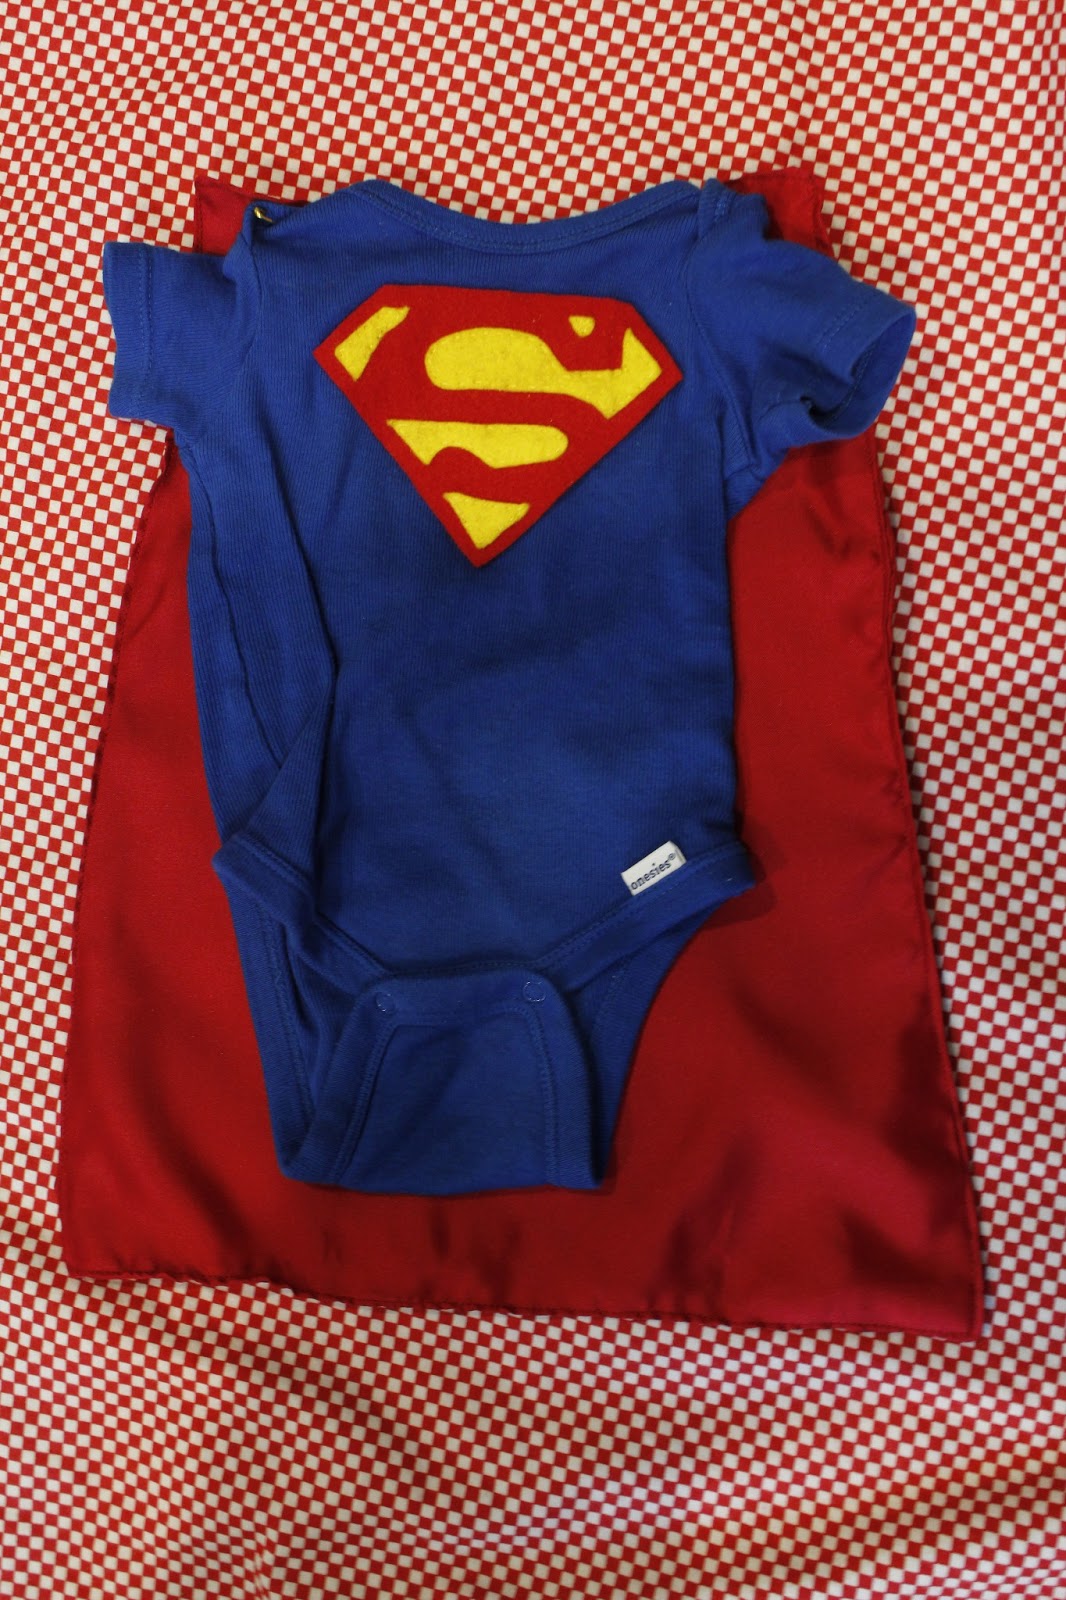 Potpourri Mommy: My little Superman